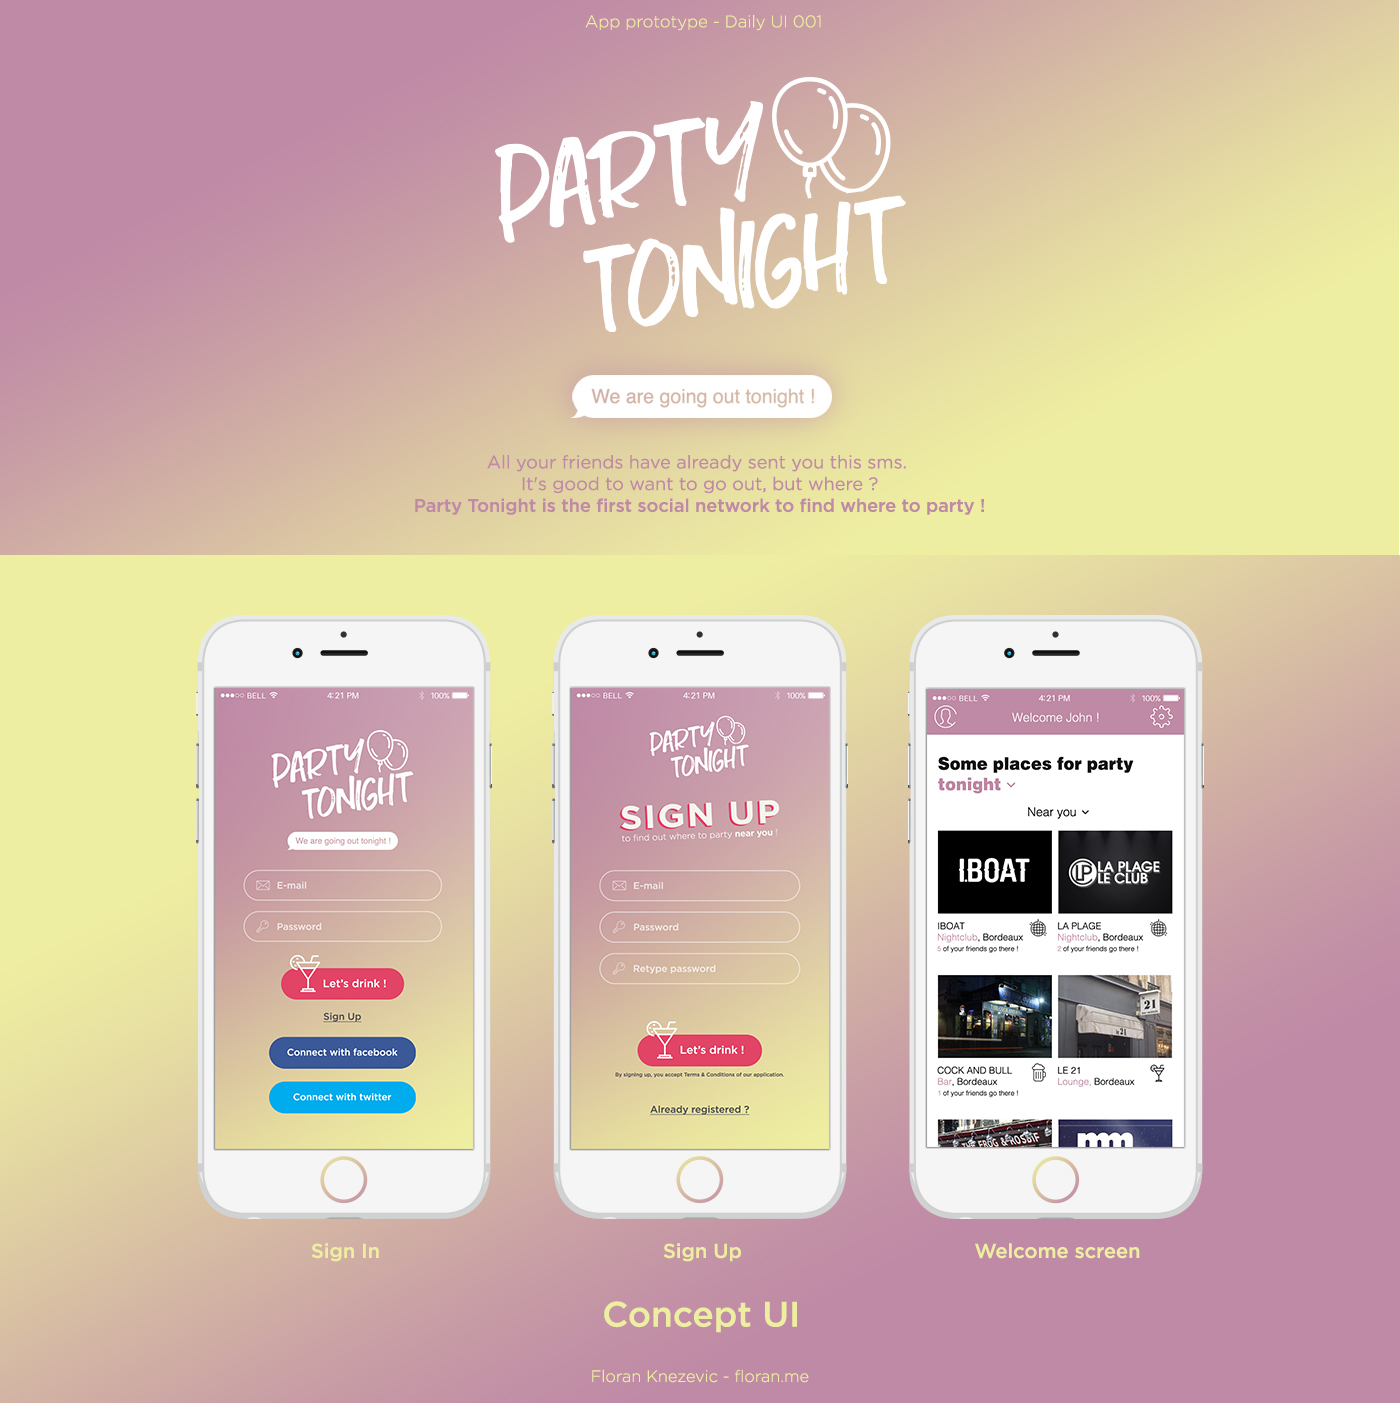 daily ui Daily UI 001 party tonight Mobile app Nightlife UI